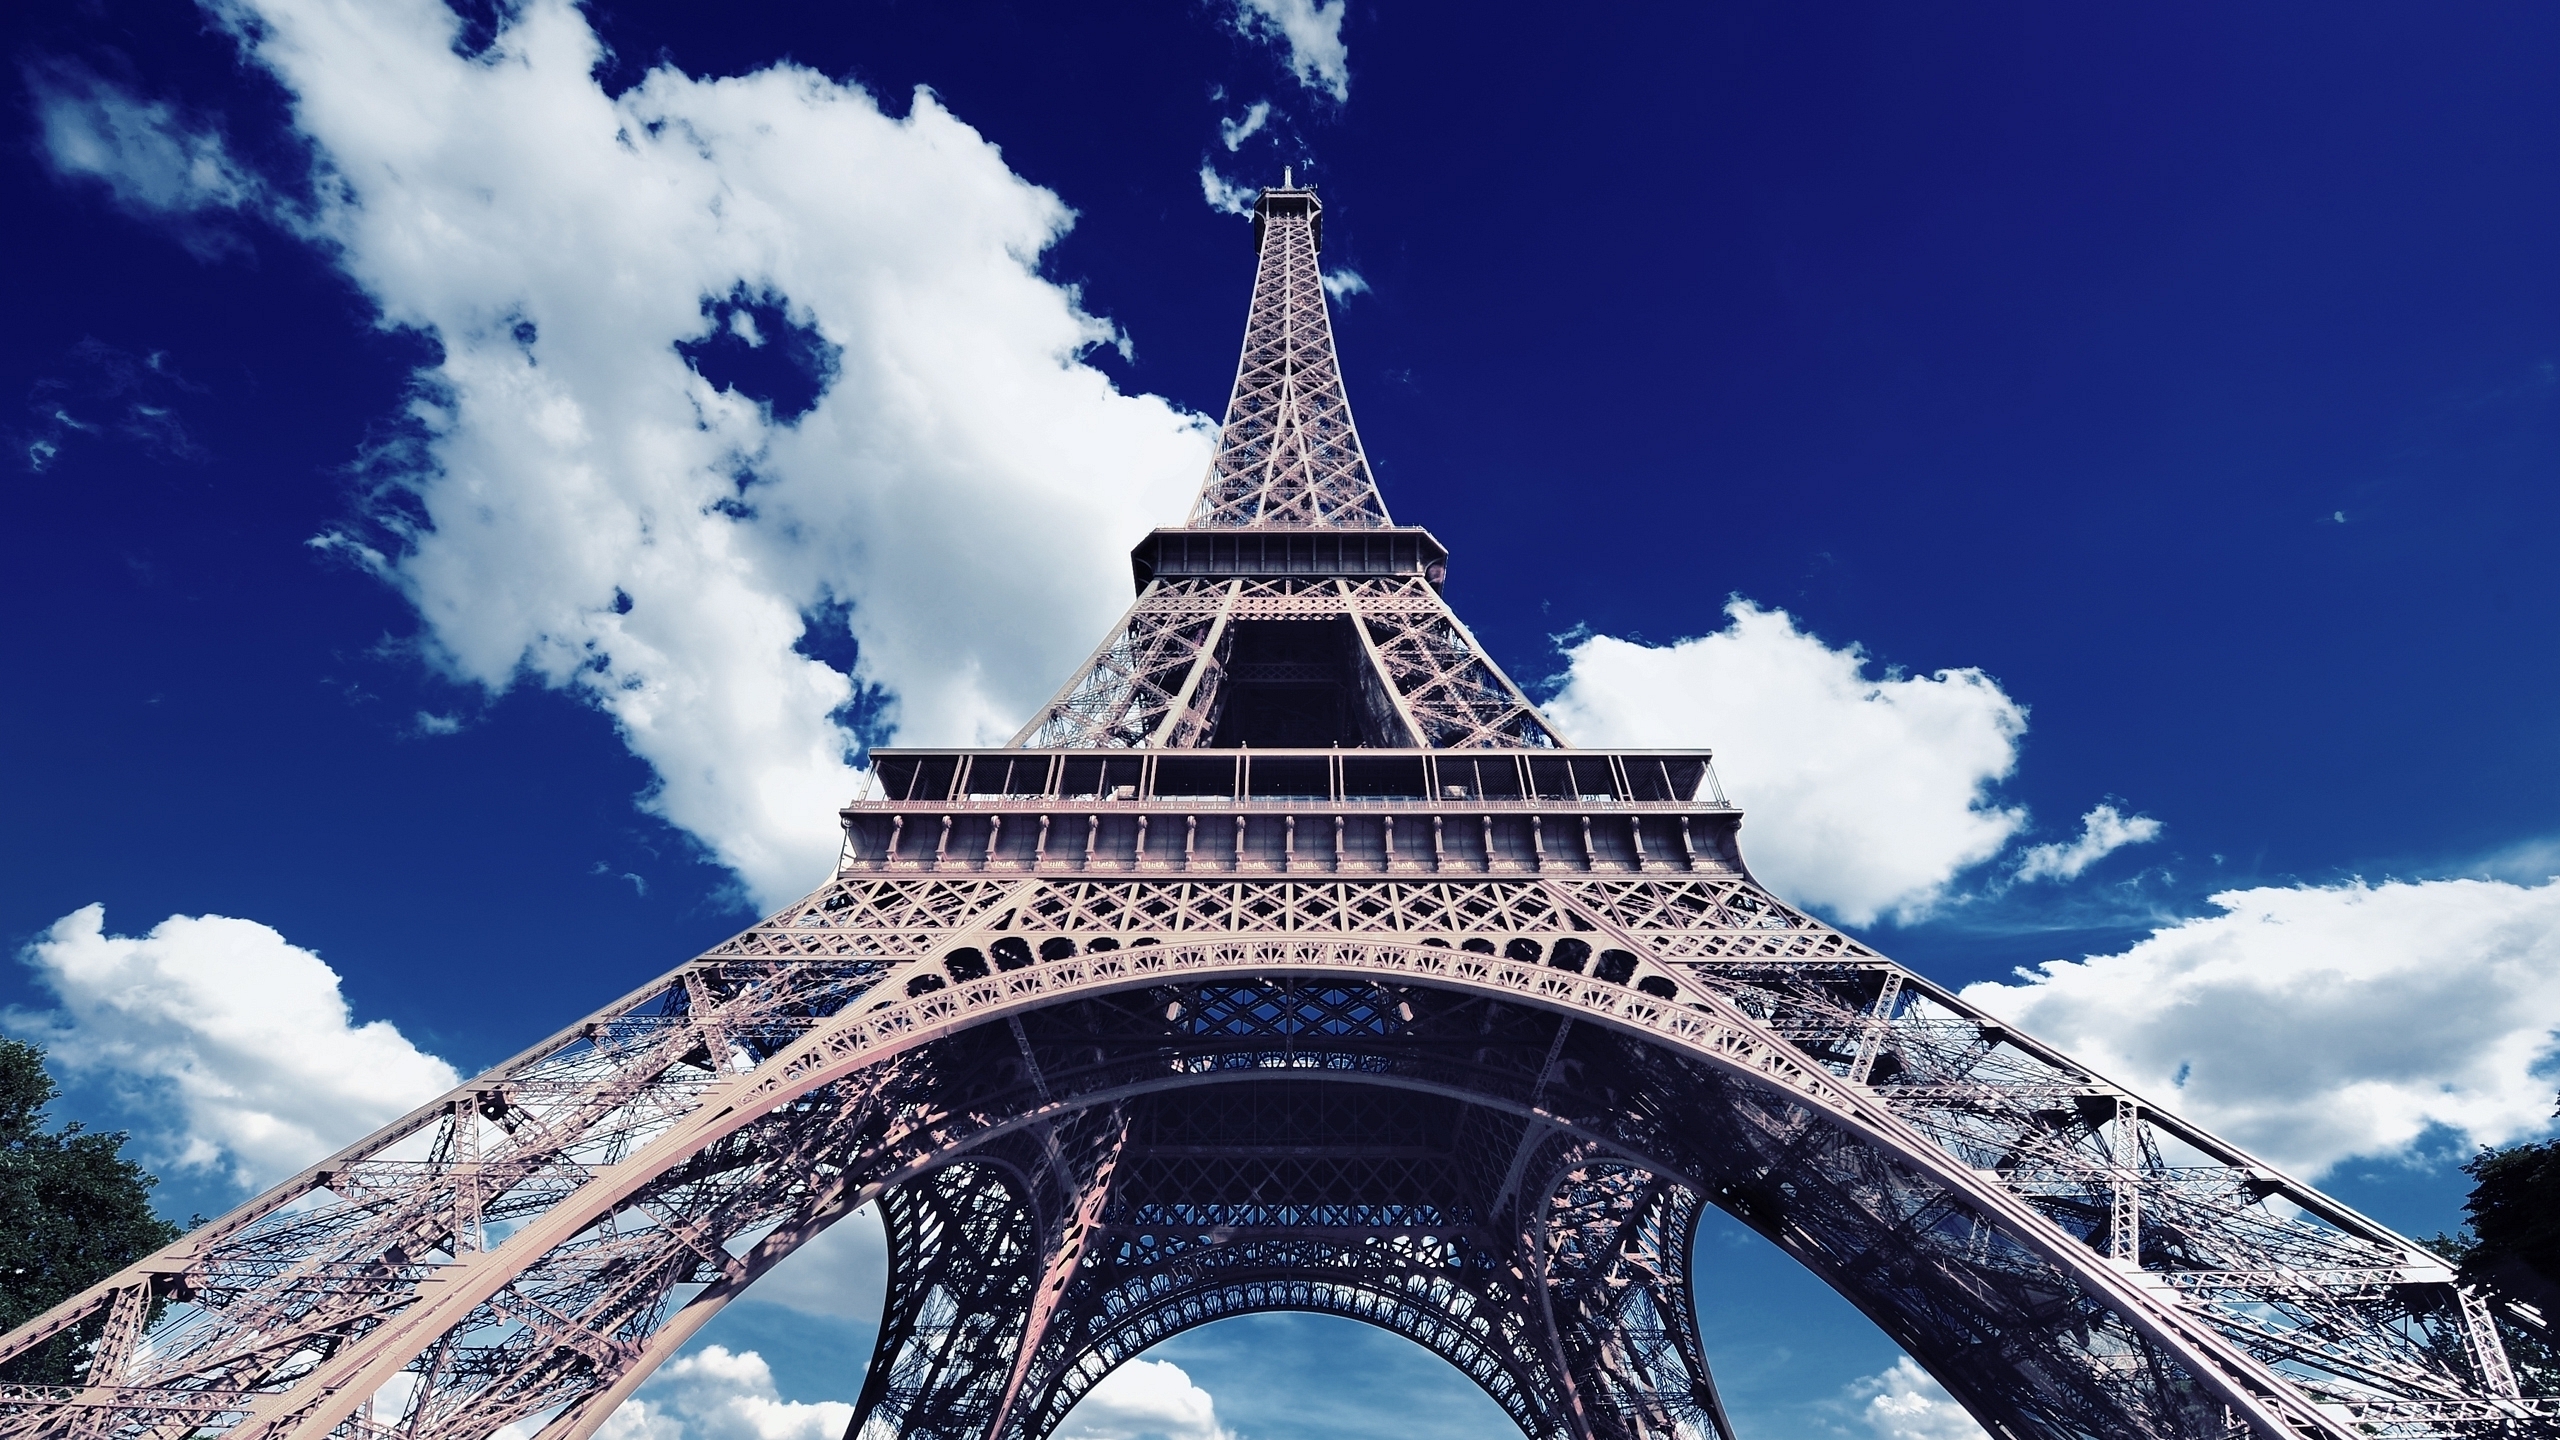 Eiffel Tower Paris for 2560x1440 HDTV resolution